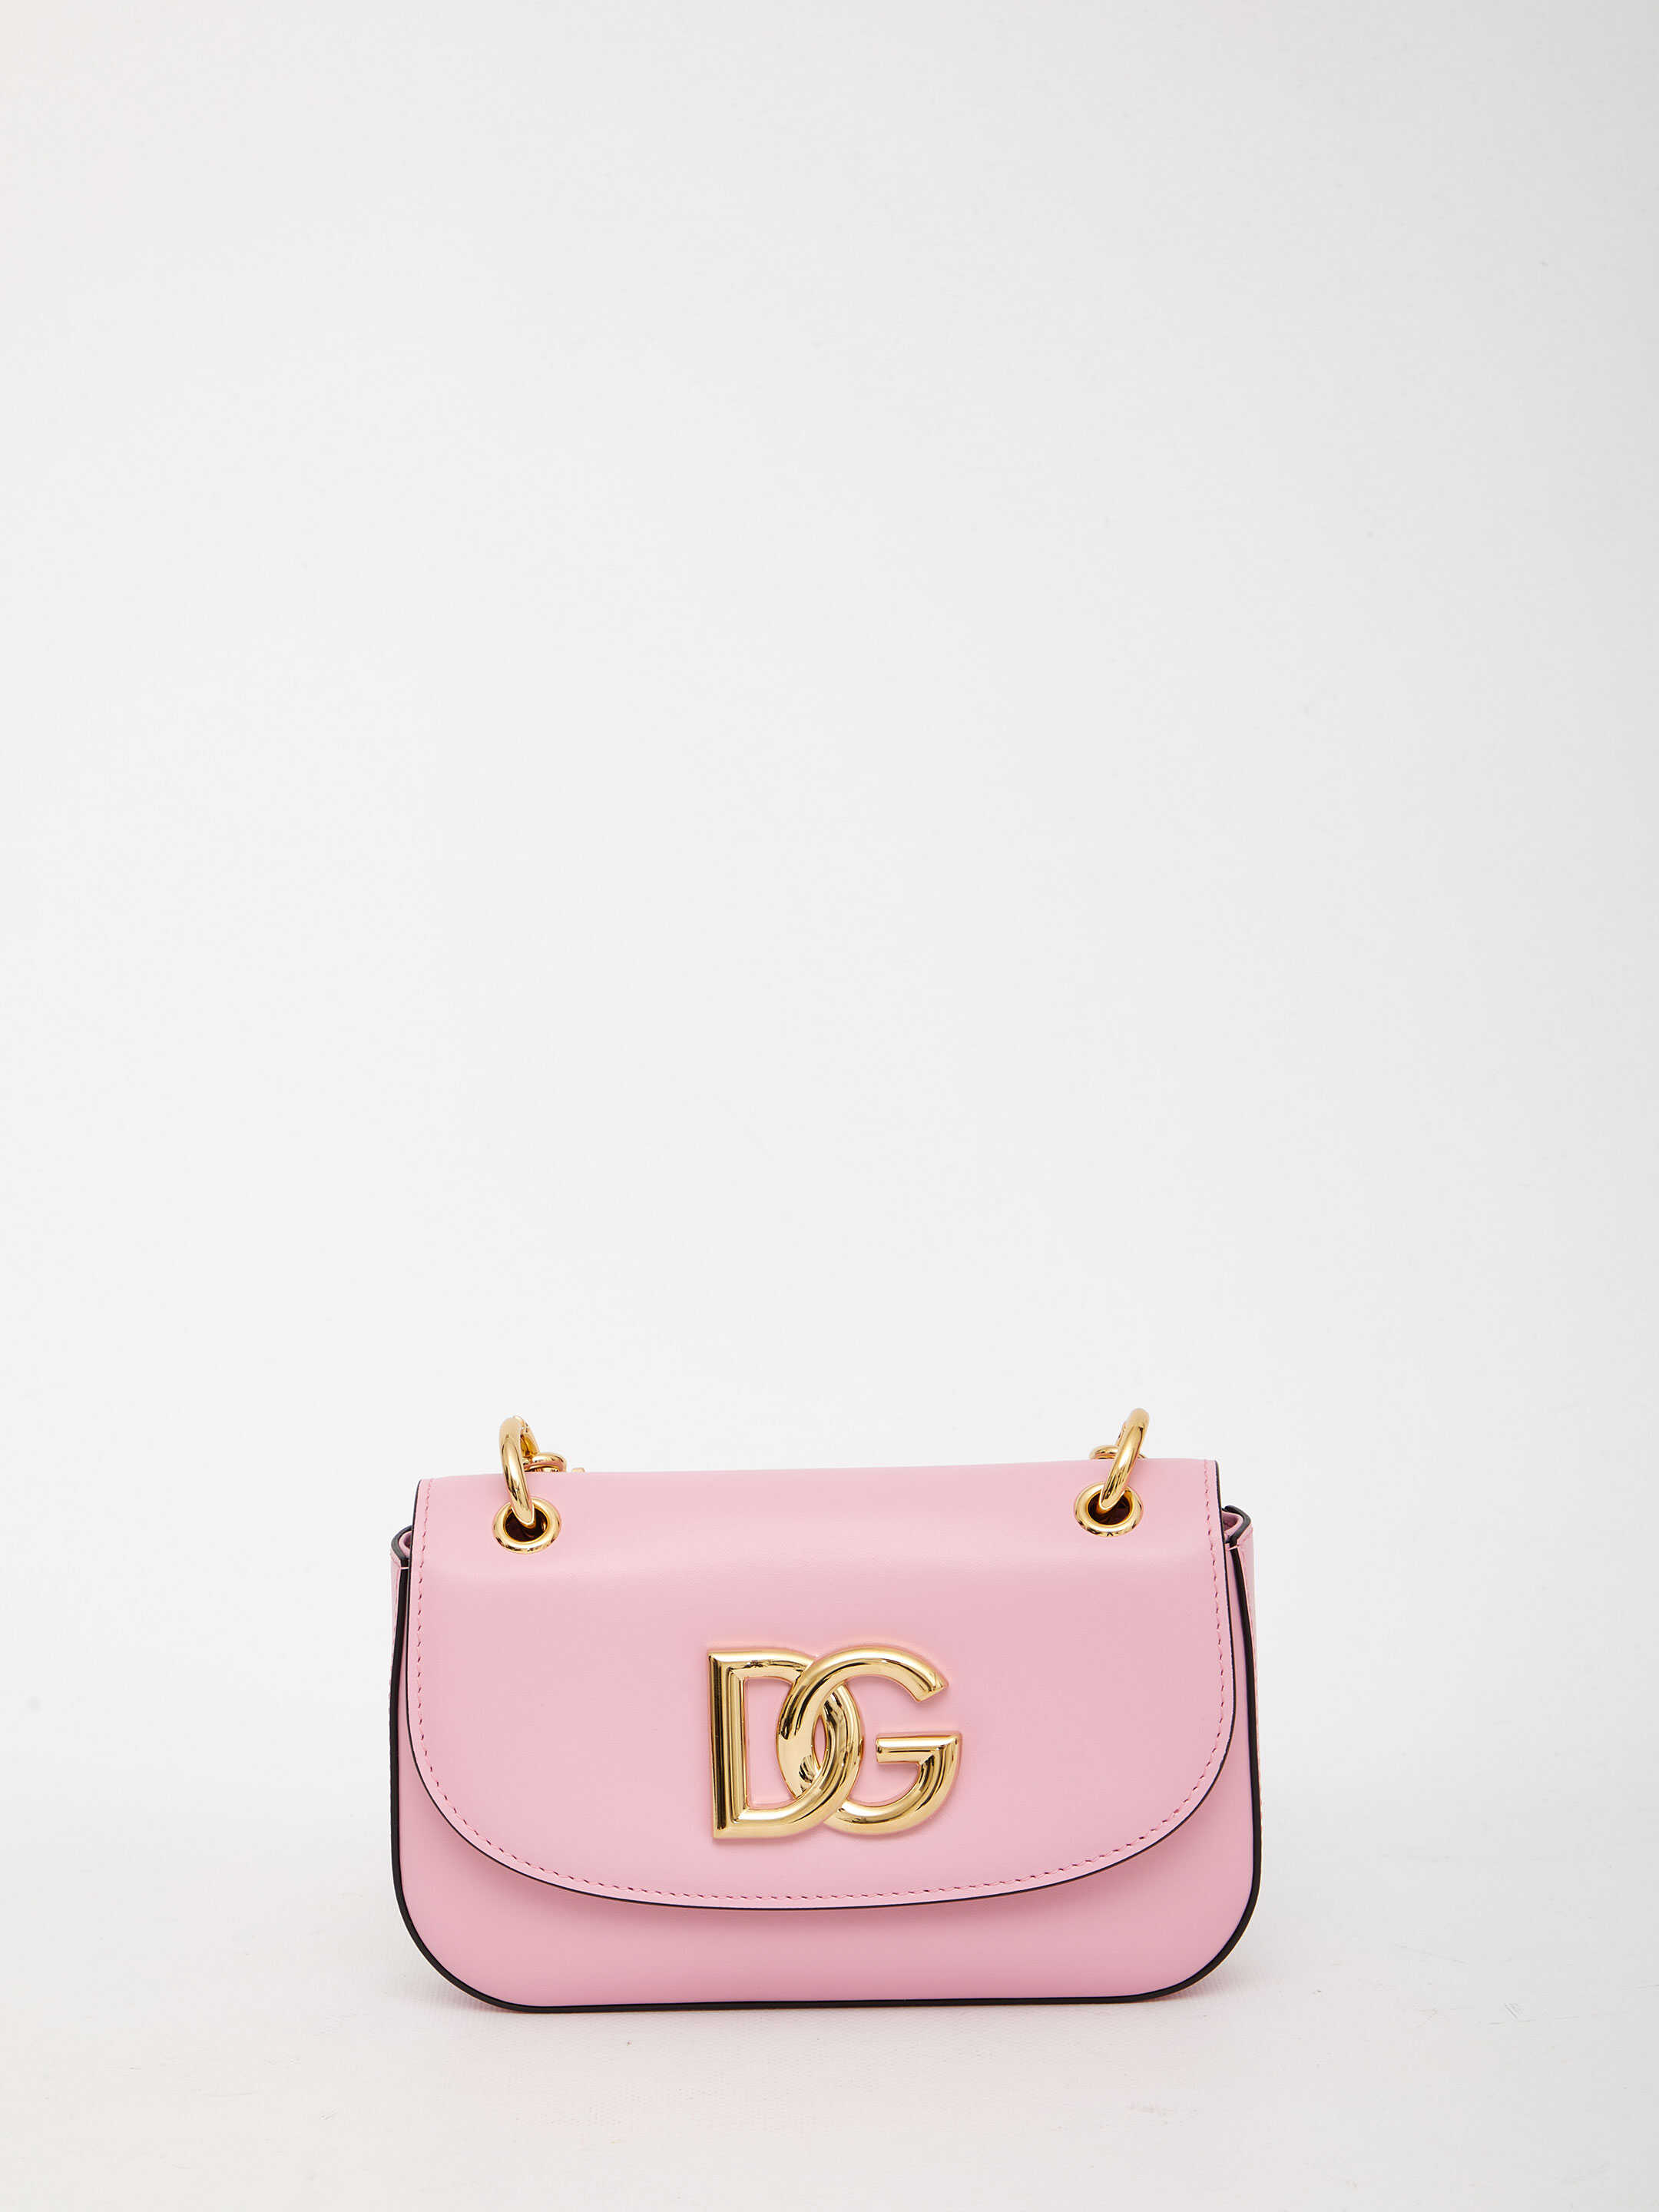 Dolce & Gabbana 3.5 Leather Bag Pink image